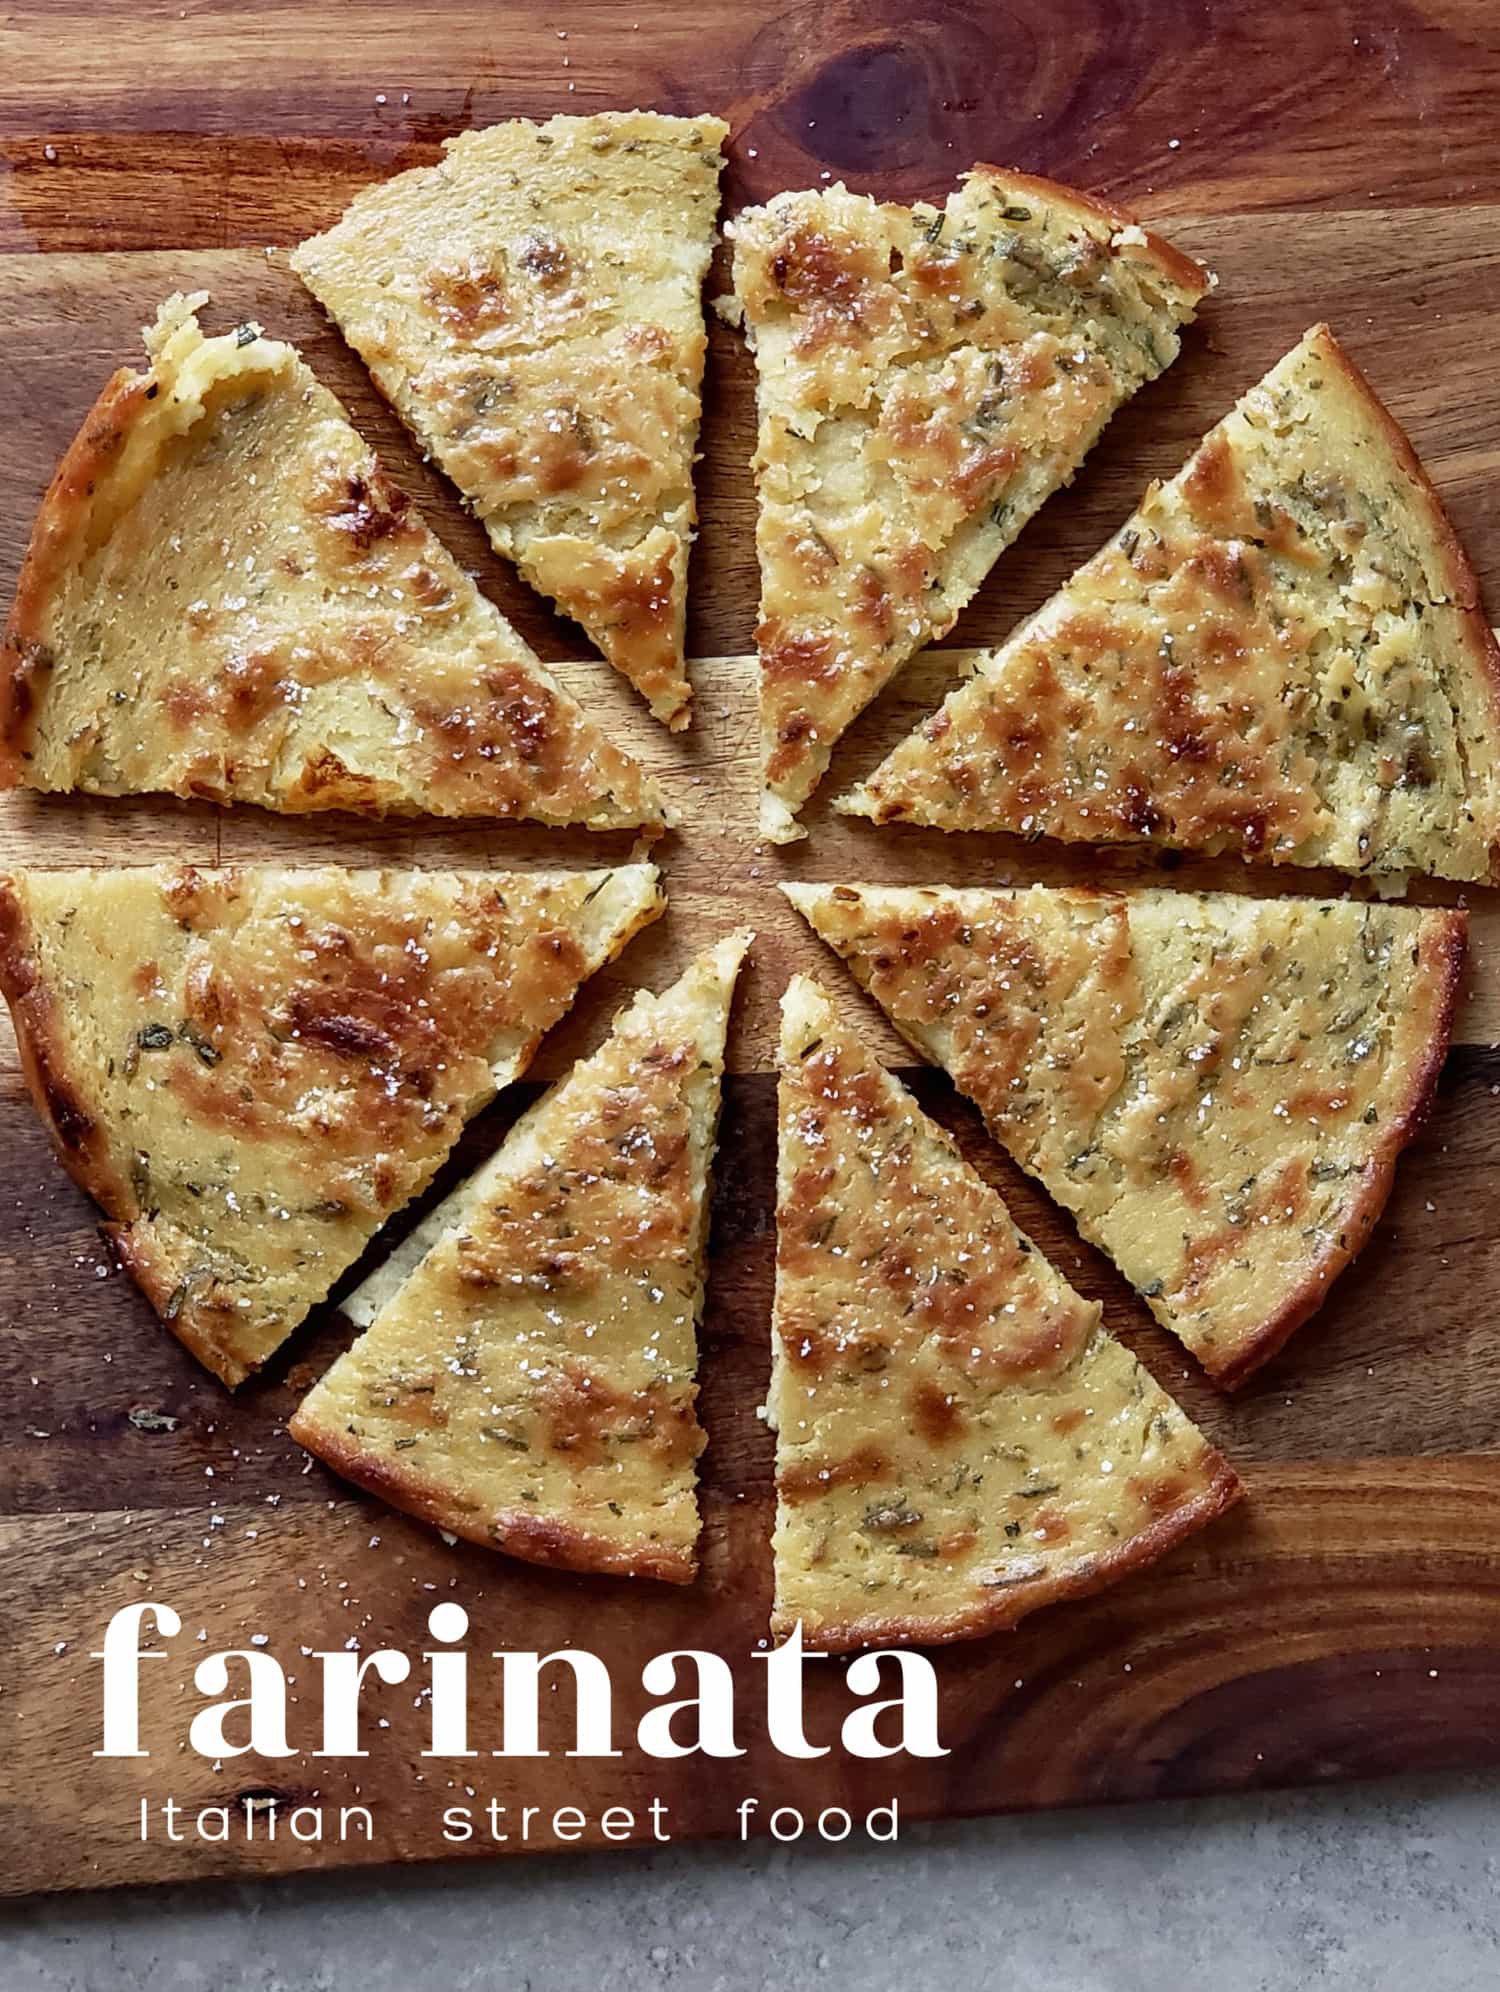 farinata – genoese street food - The Culinary Chase